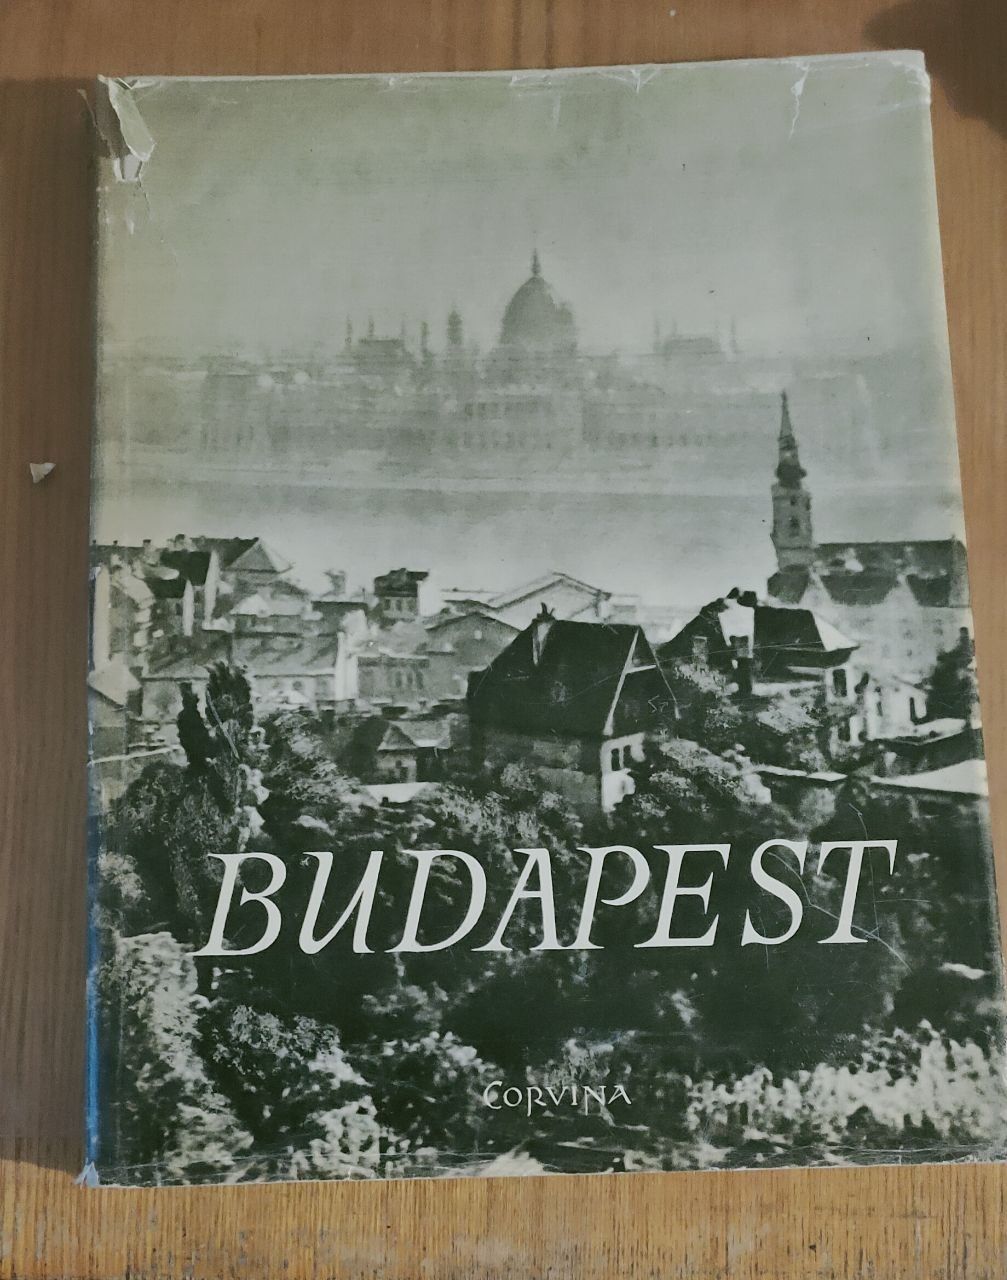 Книга - альбом Будапешт на немецком языке, 1958г.